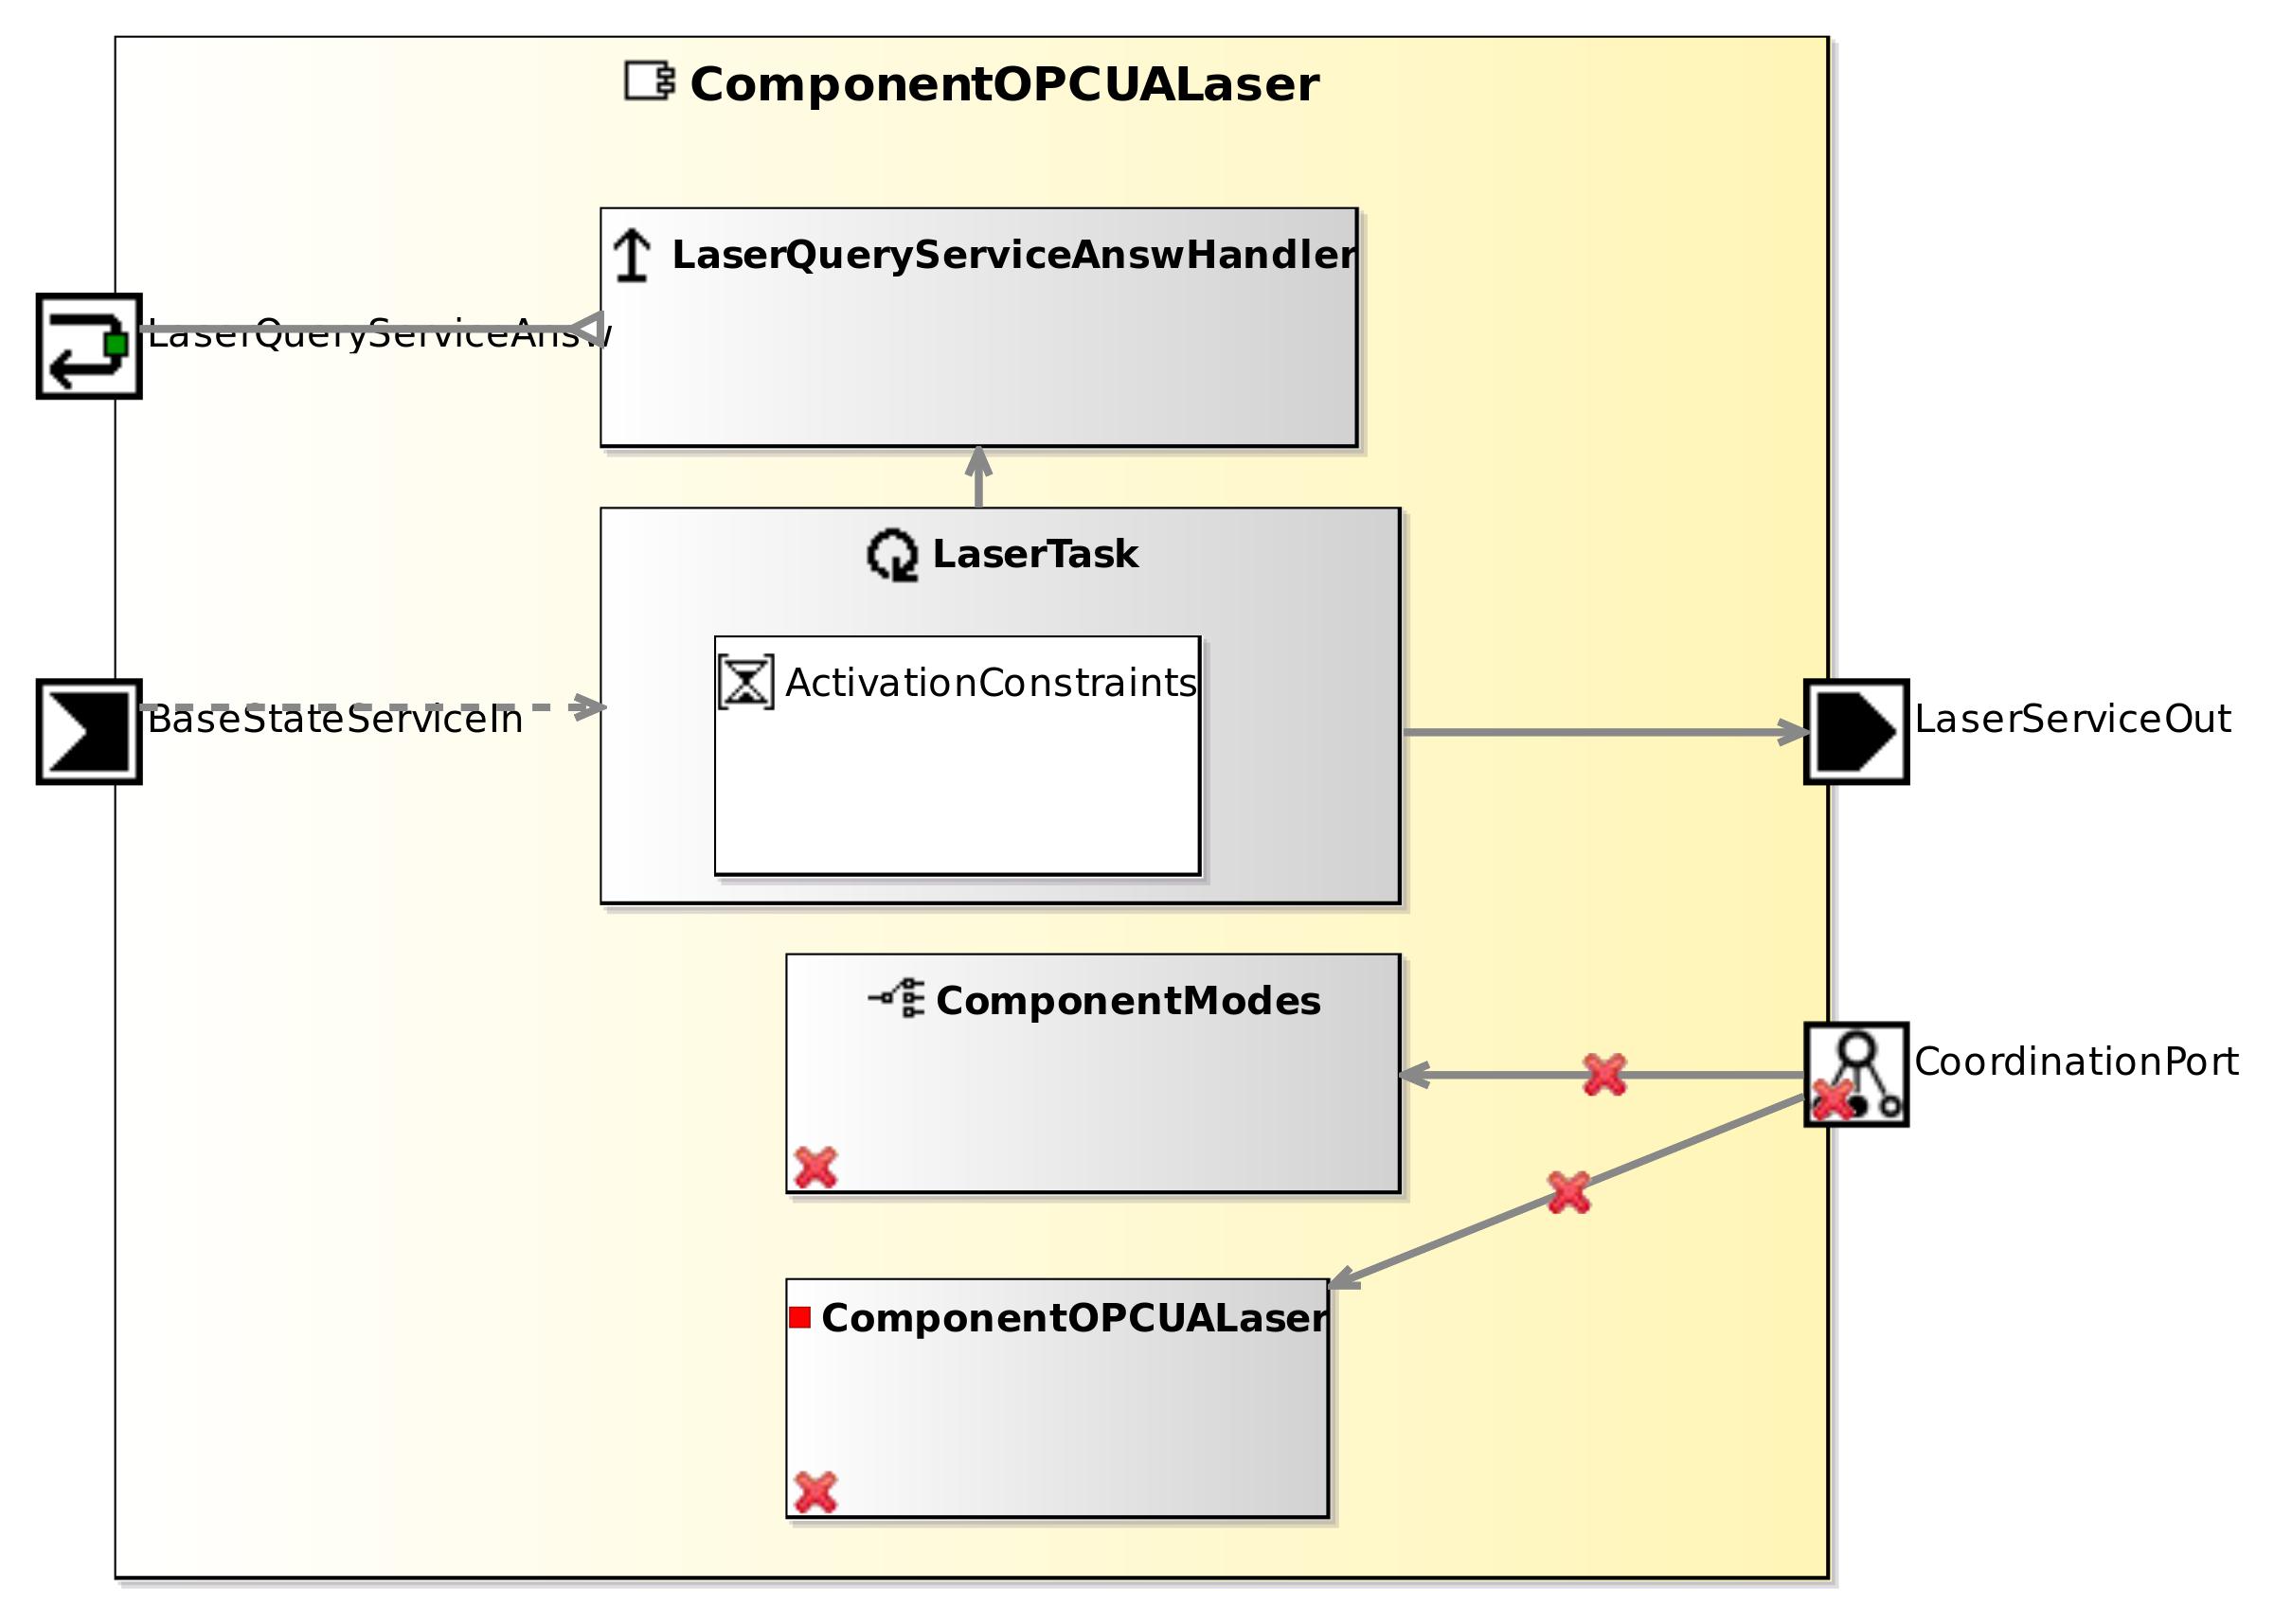 raw.githubusercontent.com_servicerobotics-ulm_componentrepository_master_componentopcualaser_model_componentopcualasercomponentdefinition.jpg